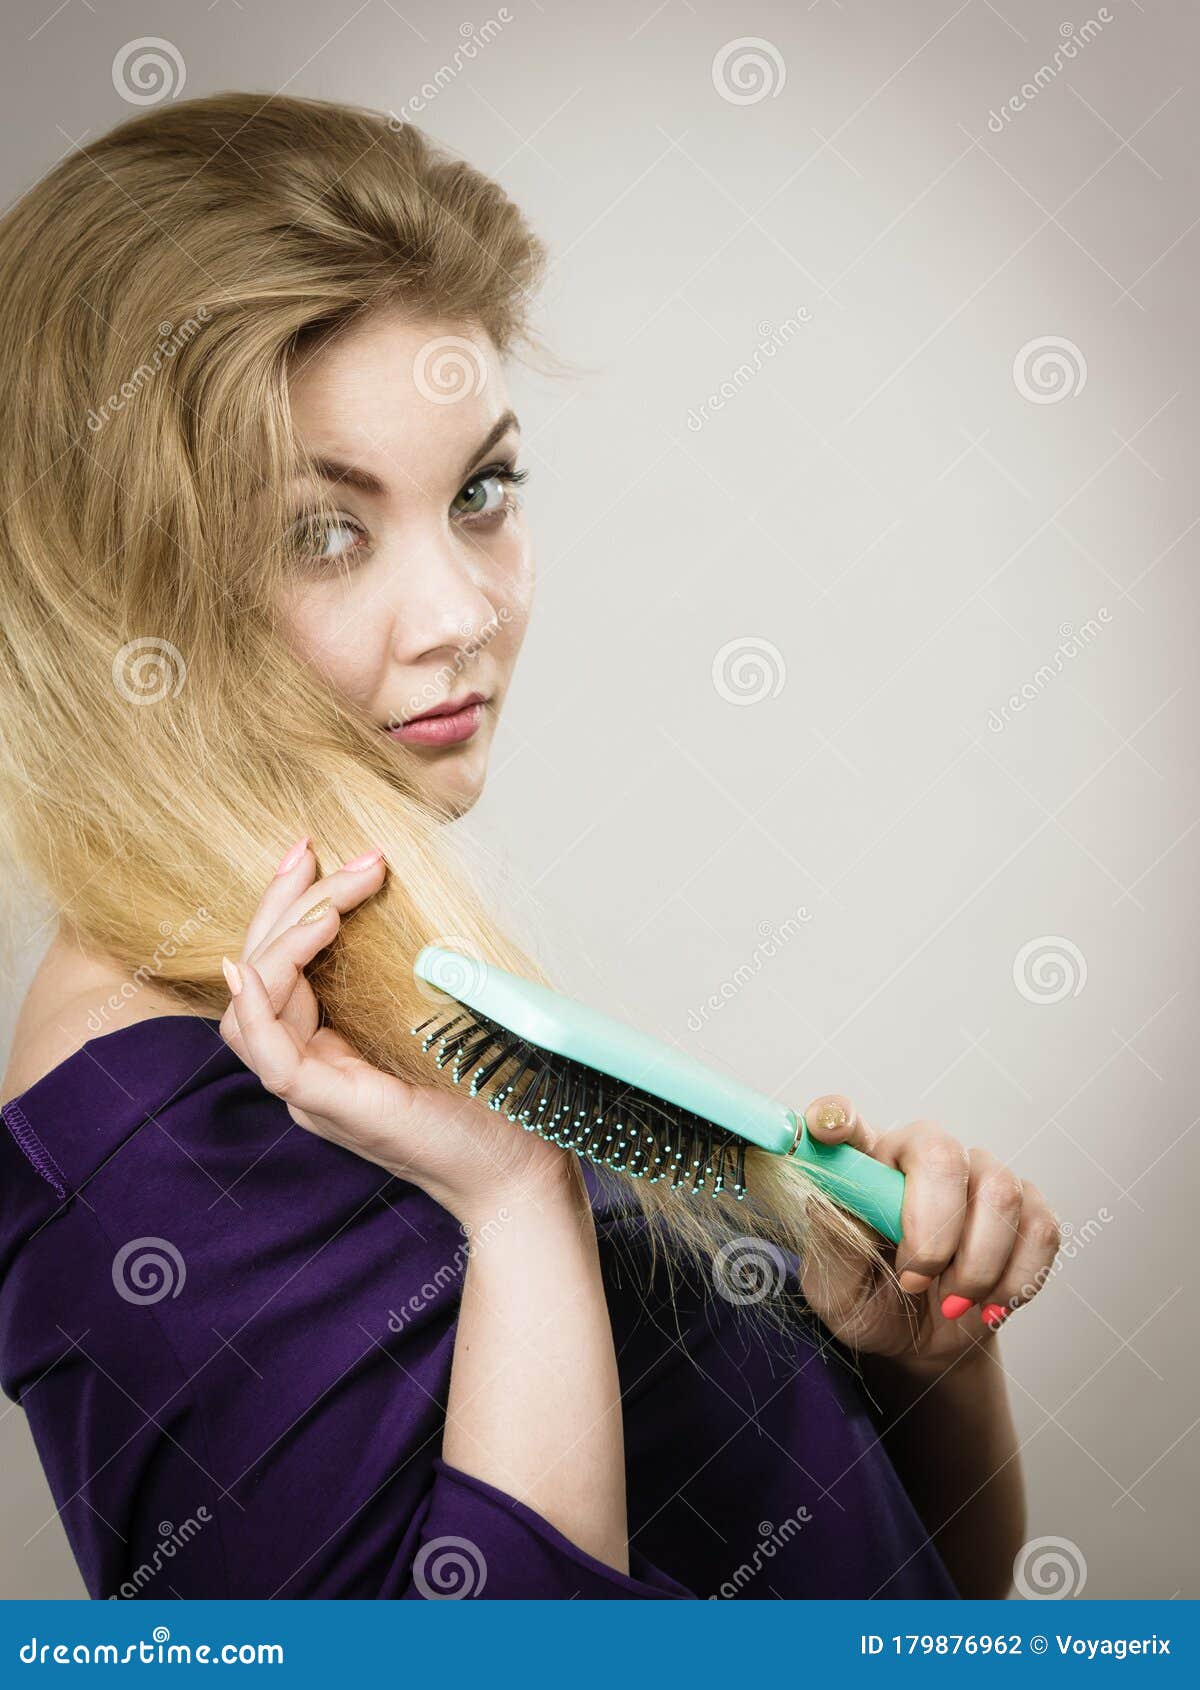 Woman Brushing Her Long Hair With Brush Stock Photo Image Of Brushing